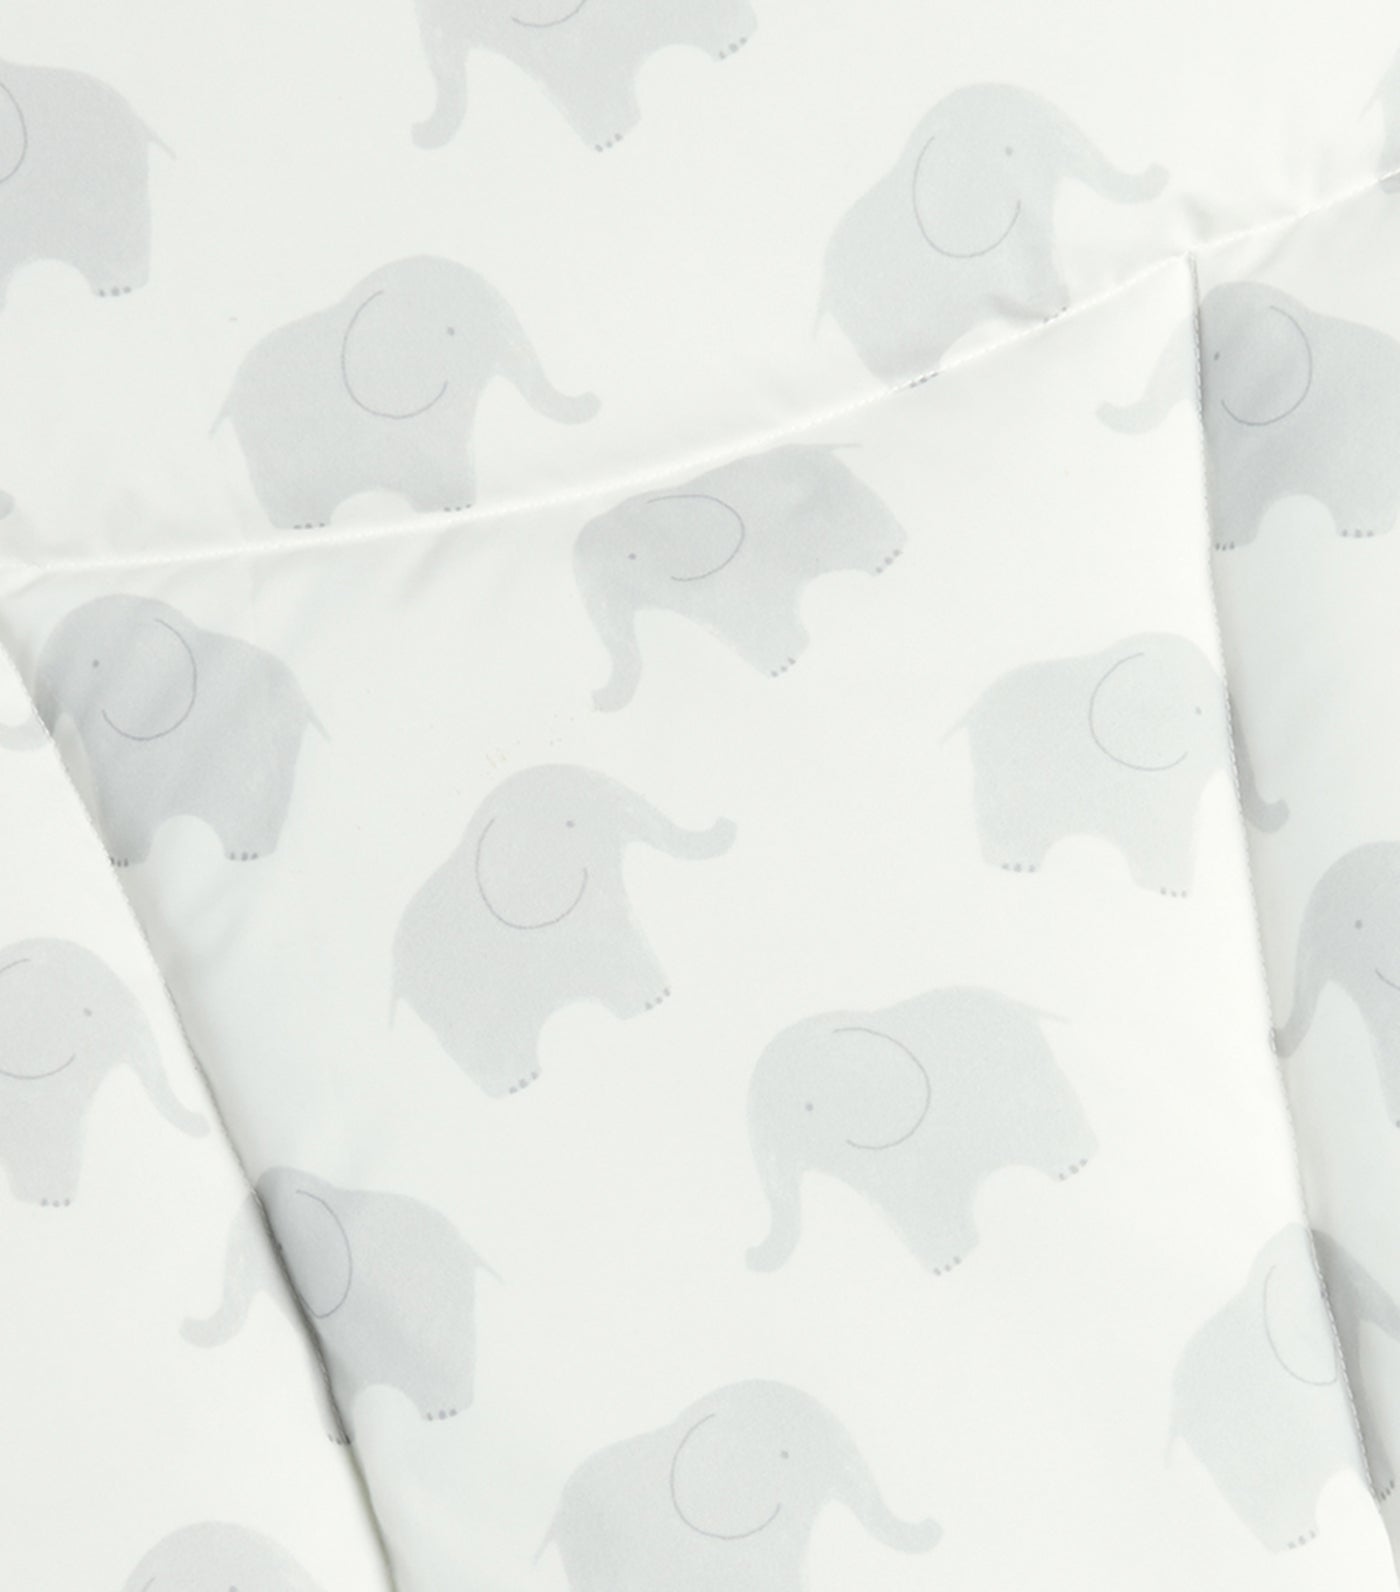 mamas & papas white elephant family changing mattress